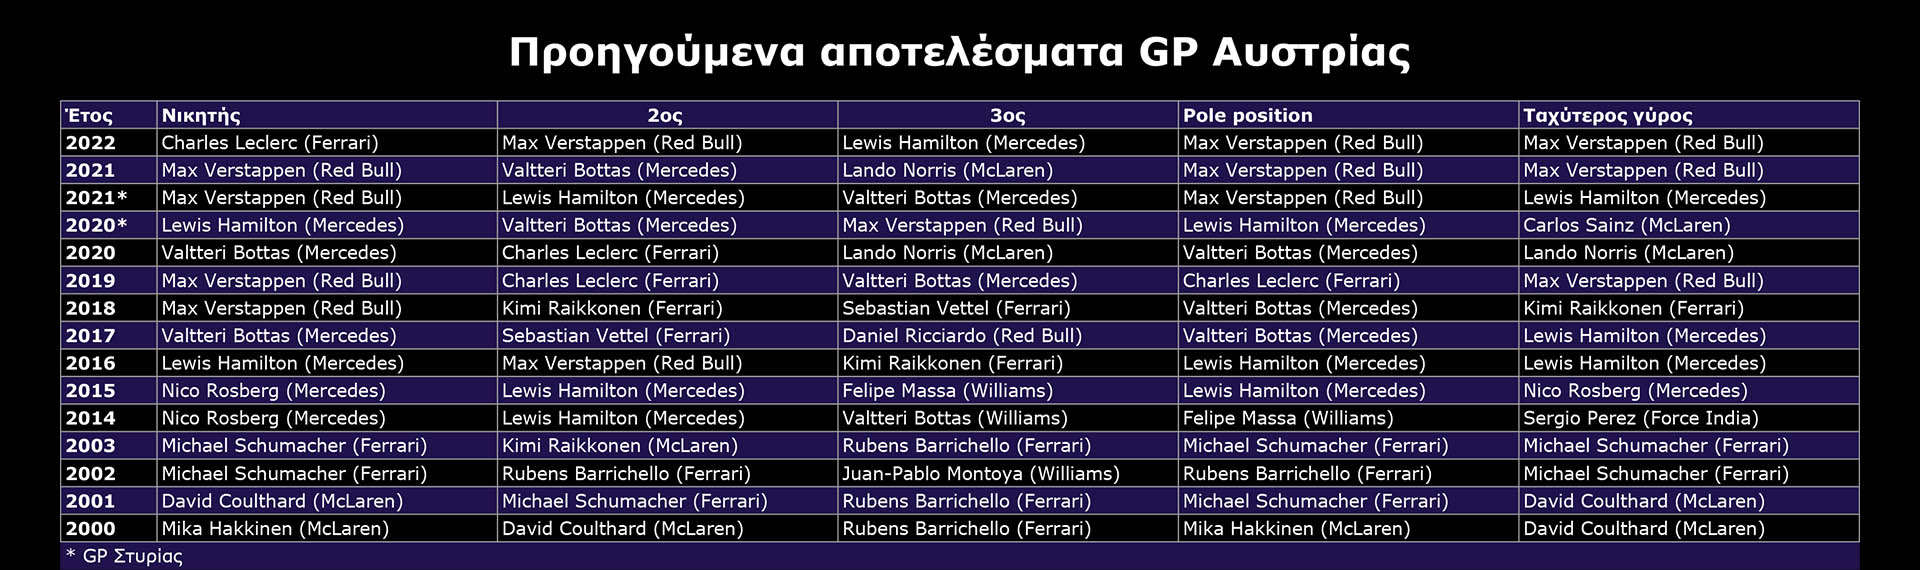 F1 - GP Αυστρίας, προηγούμενα αποτελέσματα